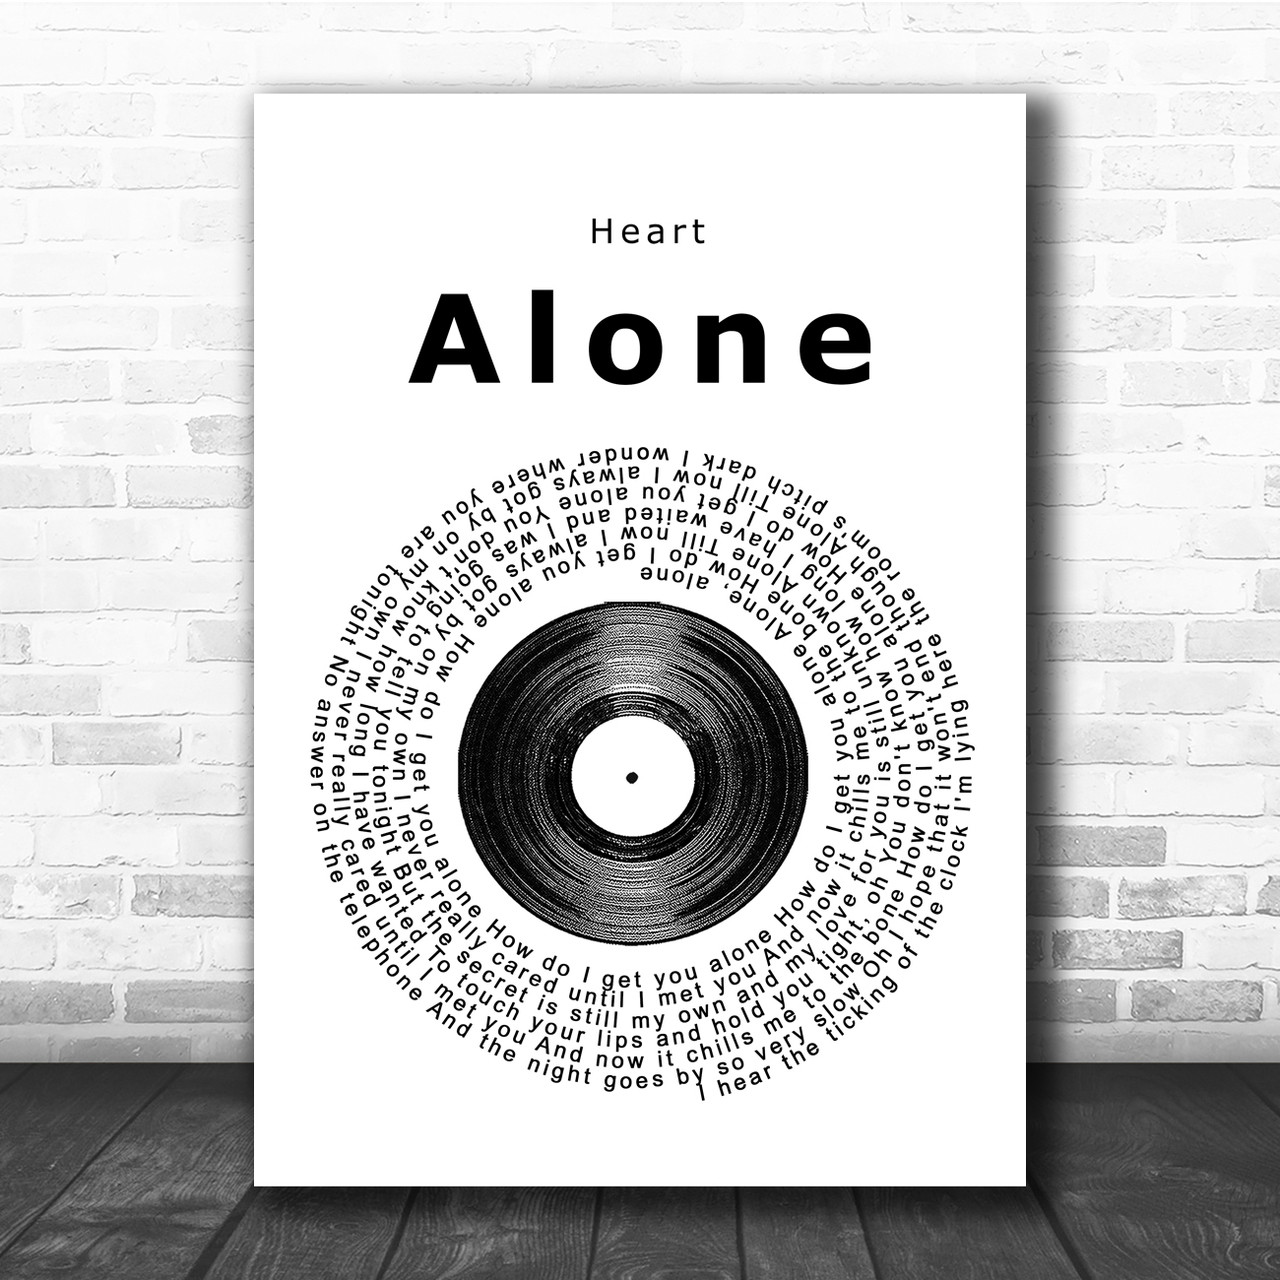 Heart – Alone Lyrics